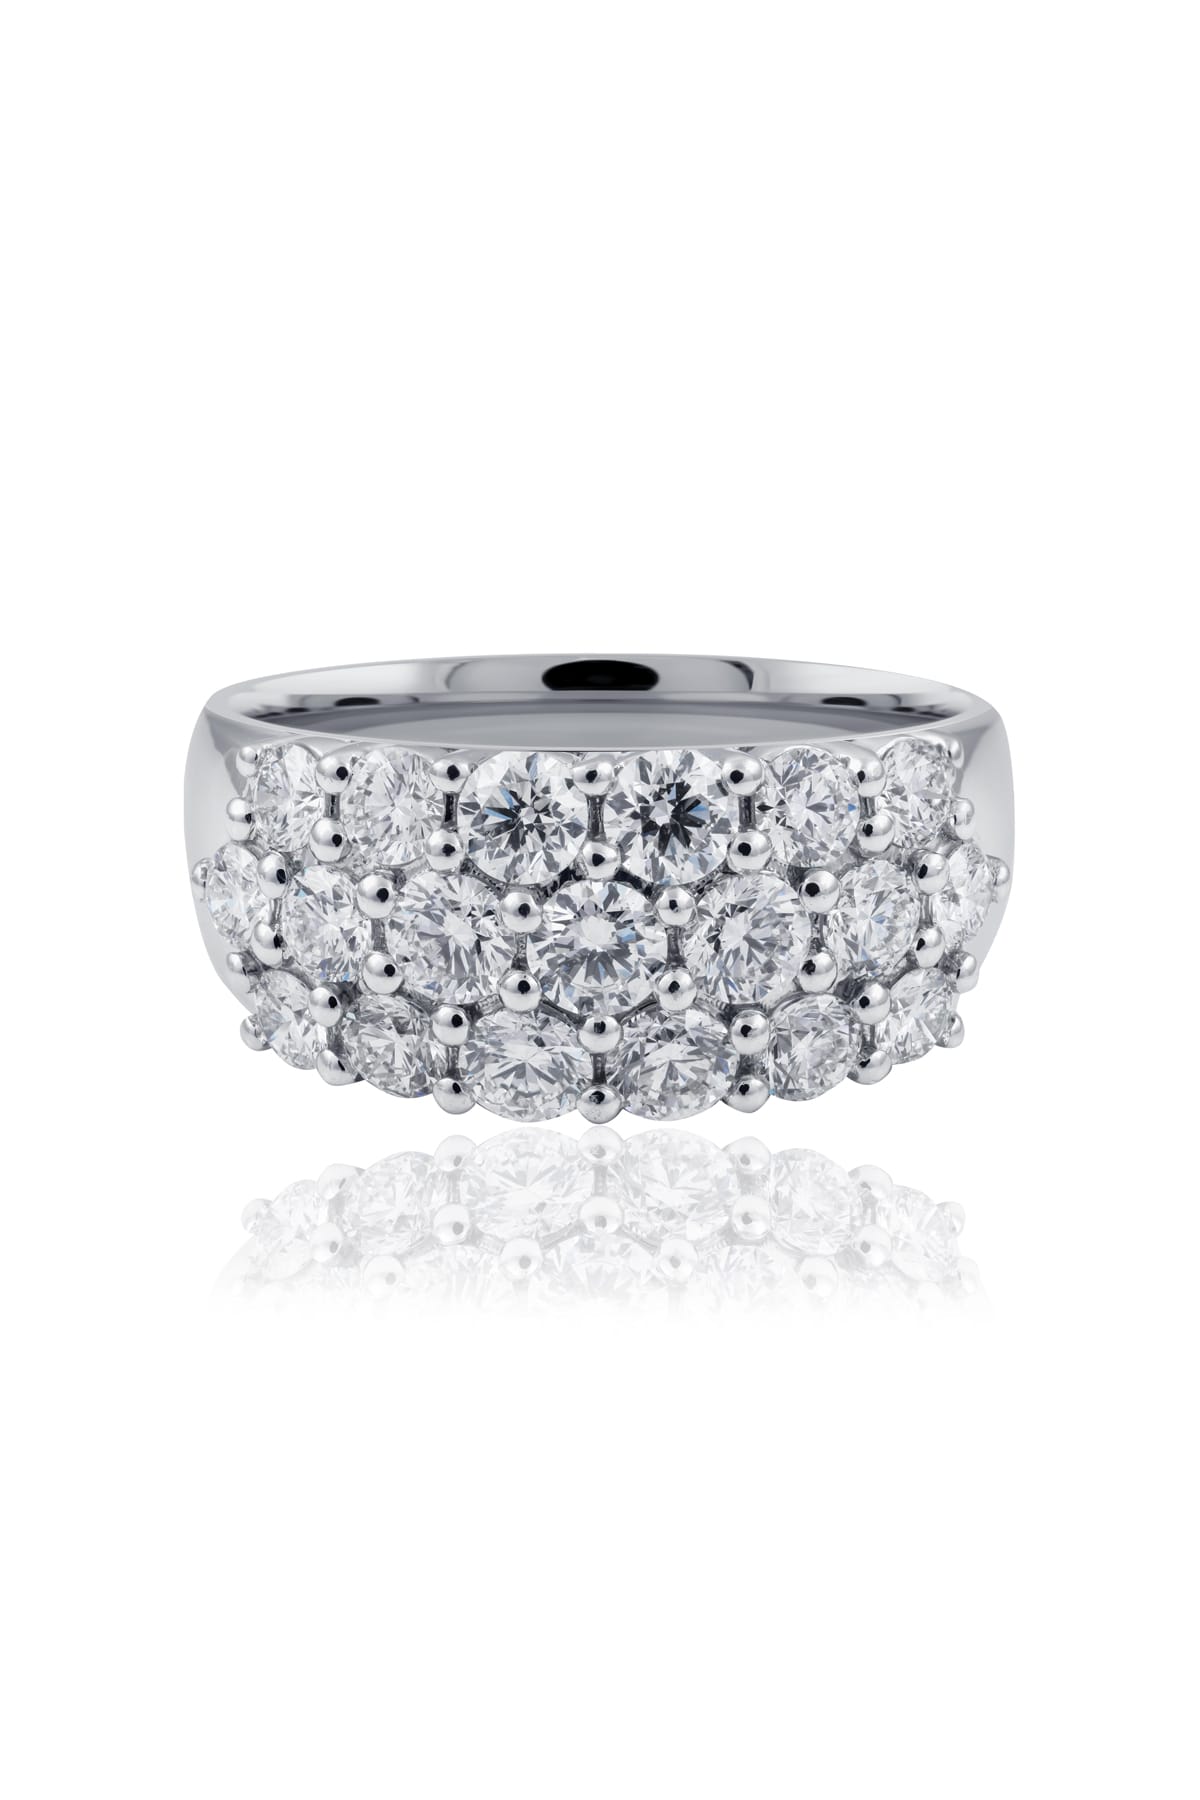 Three Row Wide 2.84ct Diamond Ring set in 18ct White Gold available at LeGassick Diamonds & Jewellery Gold Coast Australia.